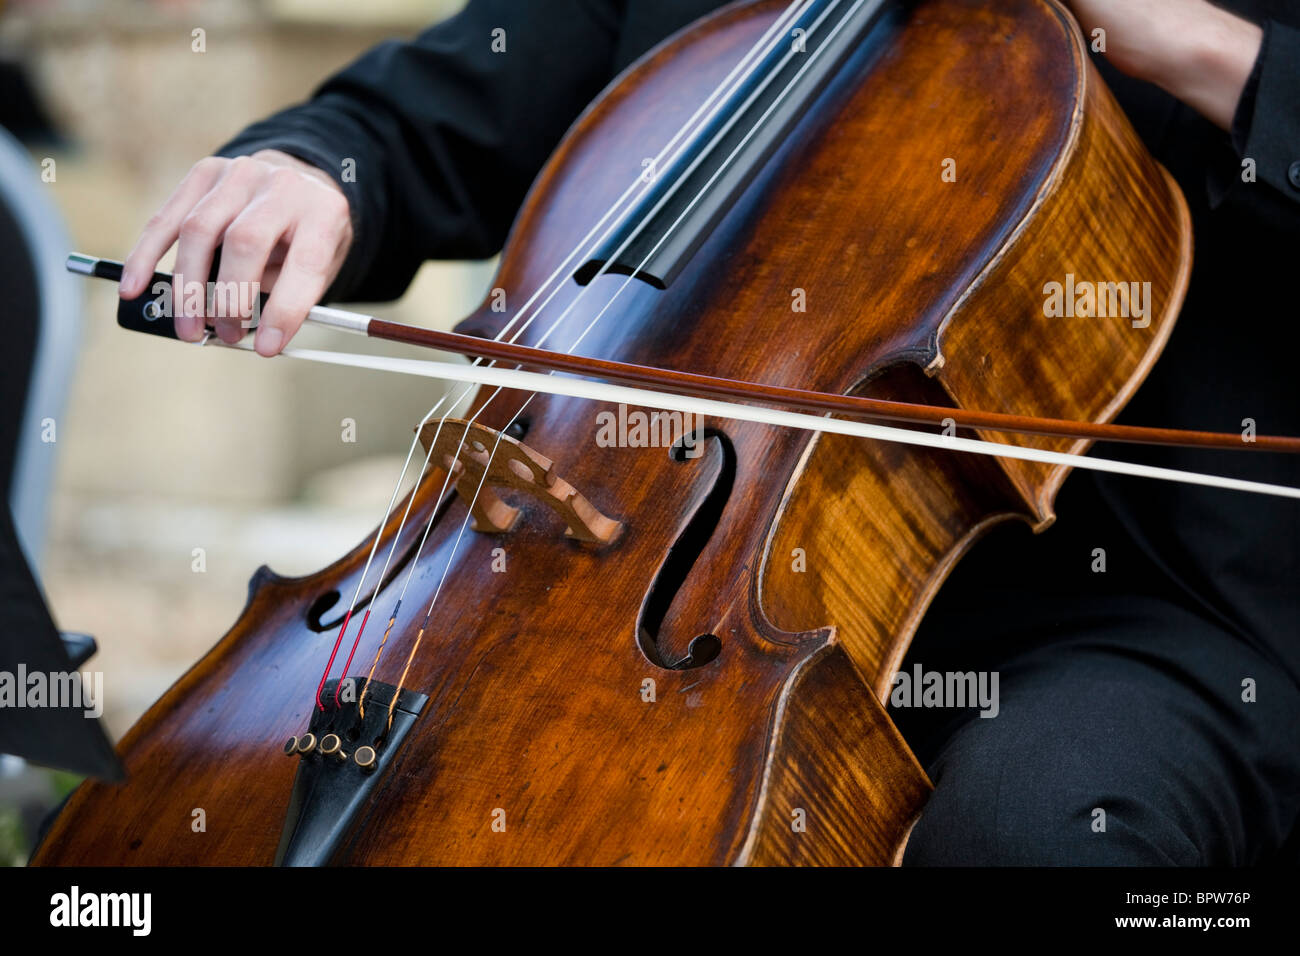 Cellist playing cello Stock Photo